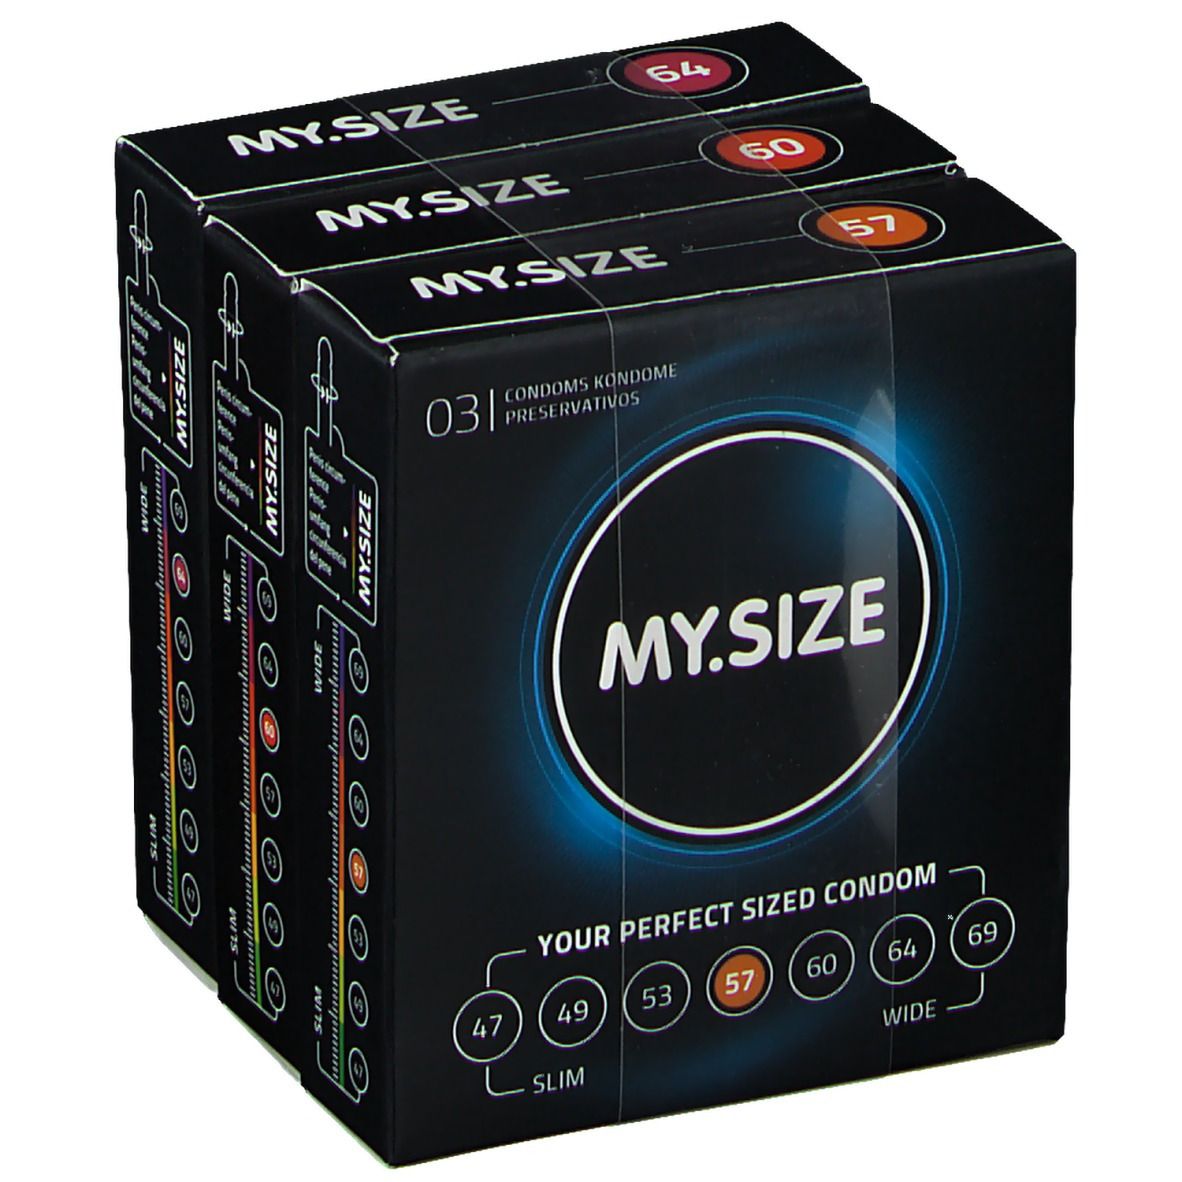 MY.SIZE 57 60 64 Kondome Testpack